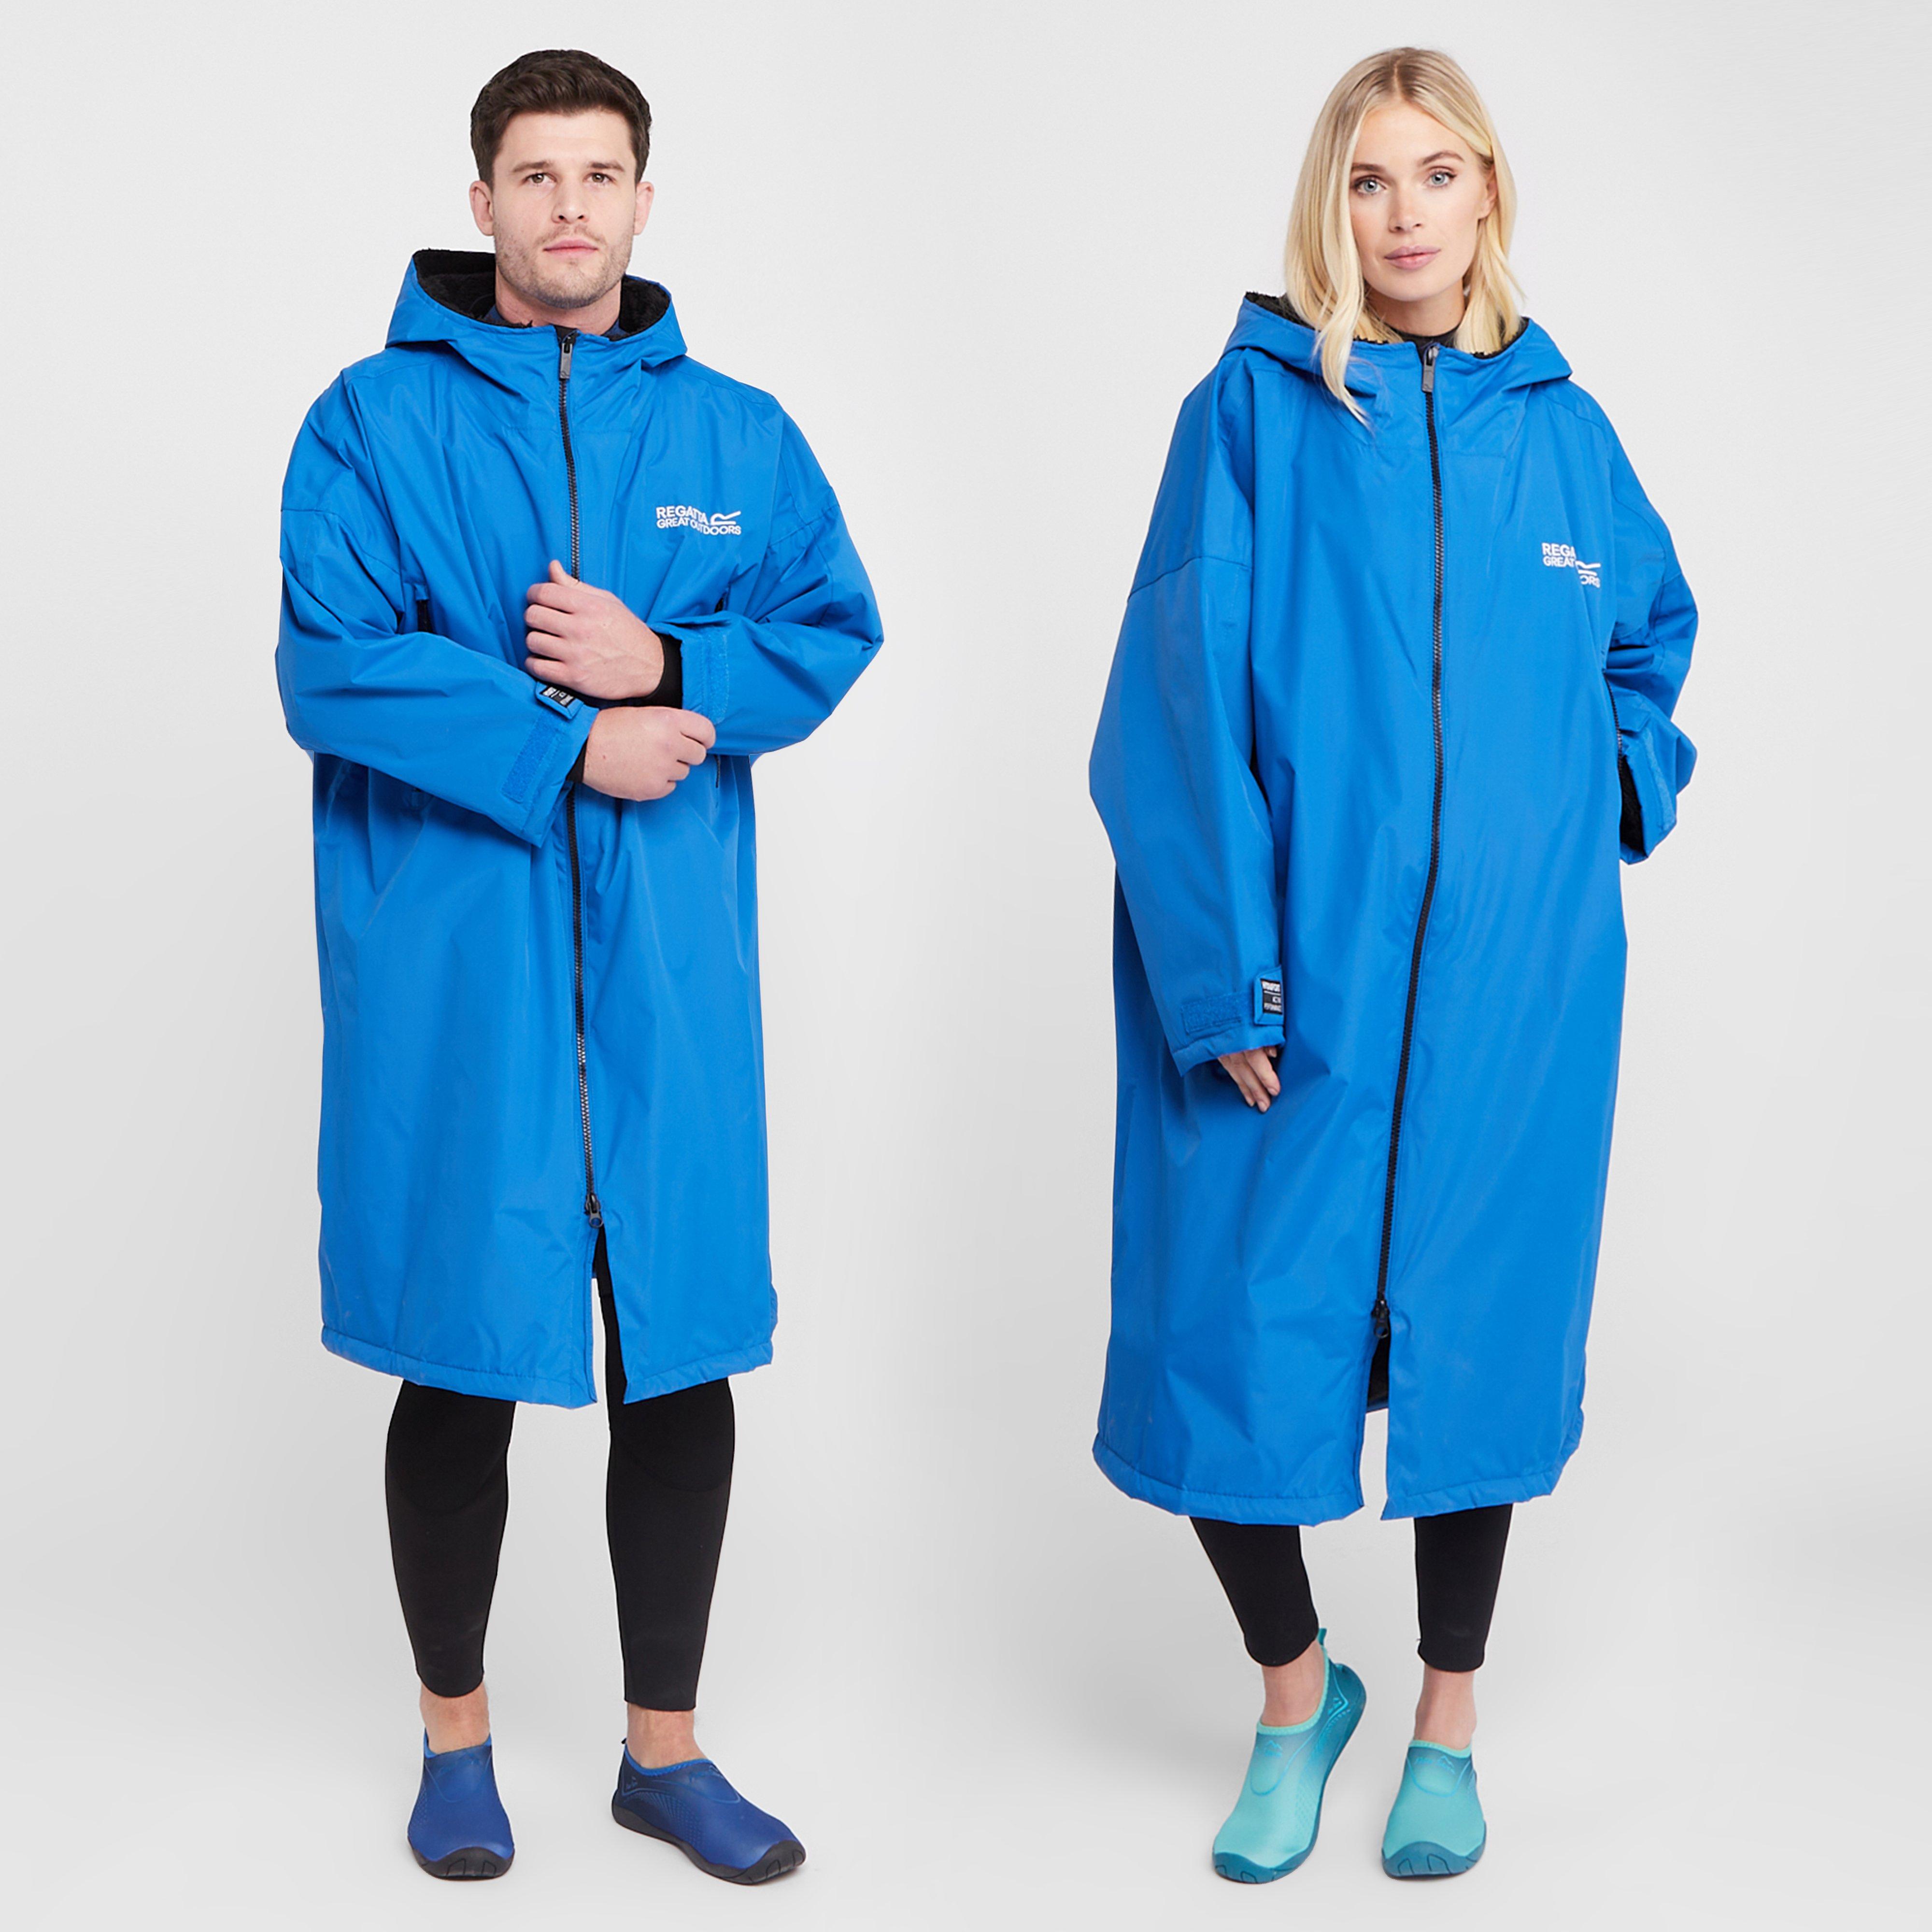  Regatta Adults Waterproof Robe Oxford Blue